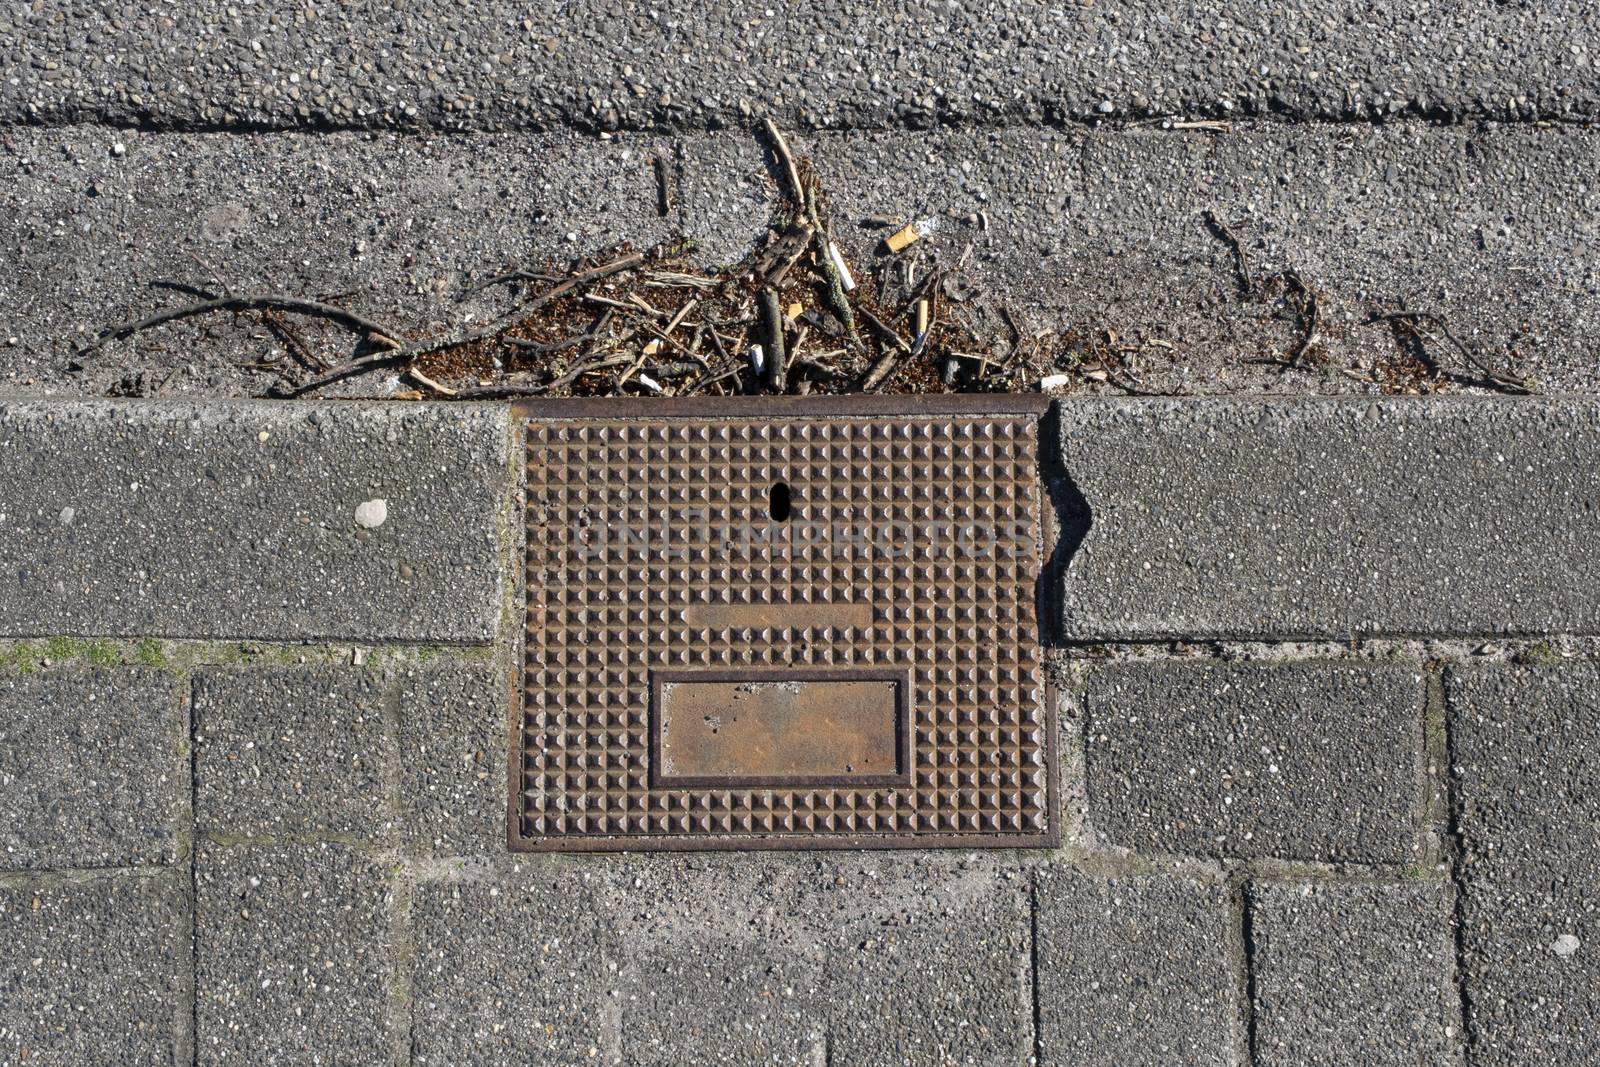 Rusty manhole cap, grunge manhole cover square by Tjeerdkruse